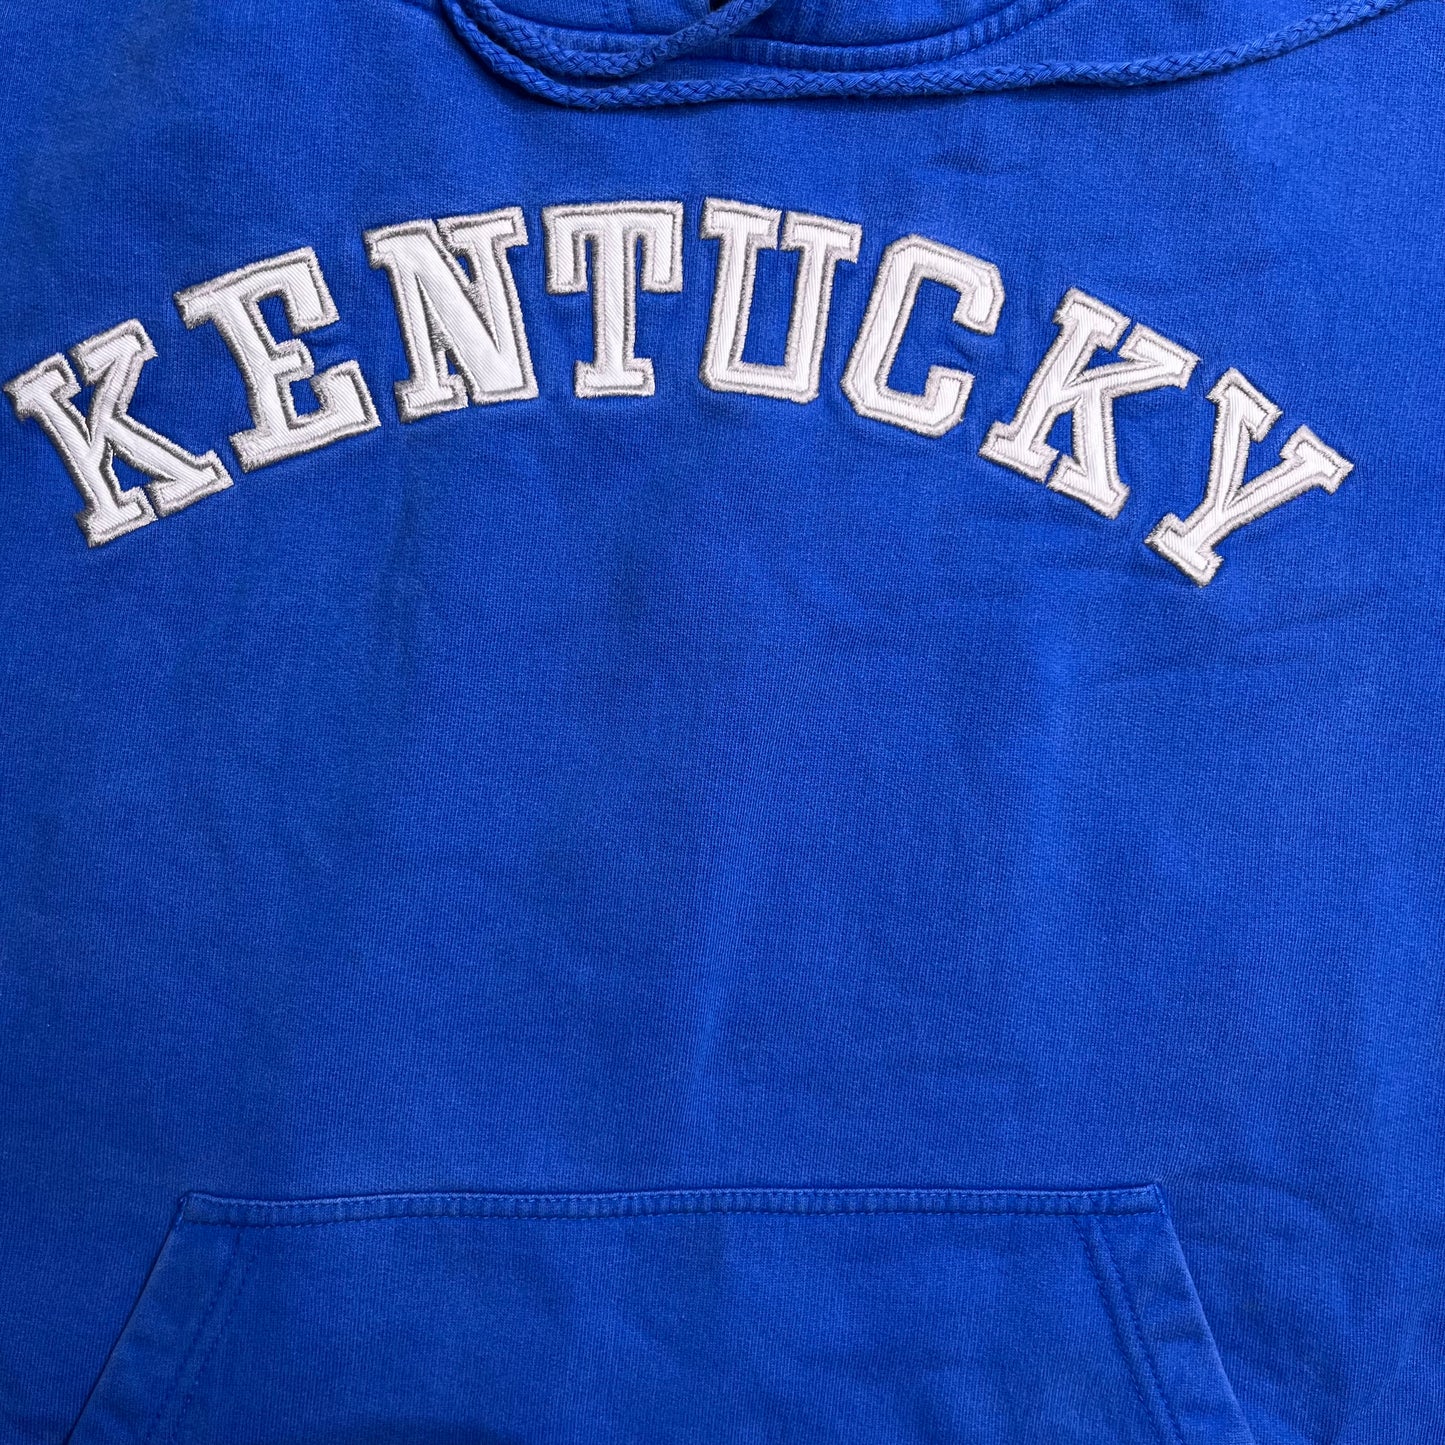 00s Kentucky University Hoodie (XL)